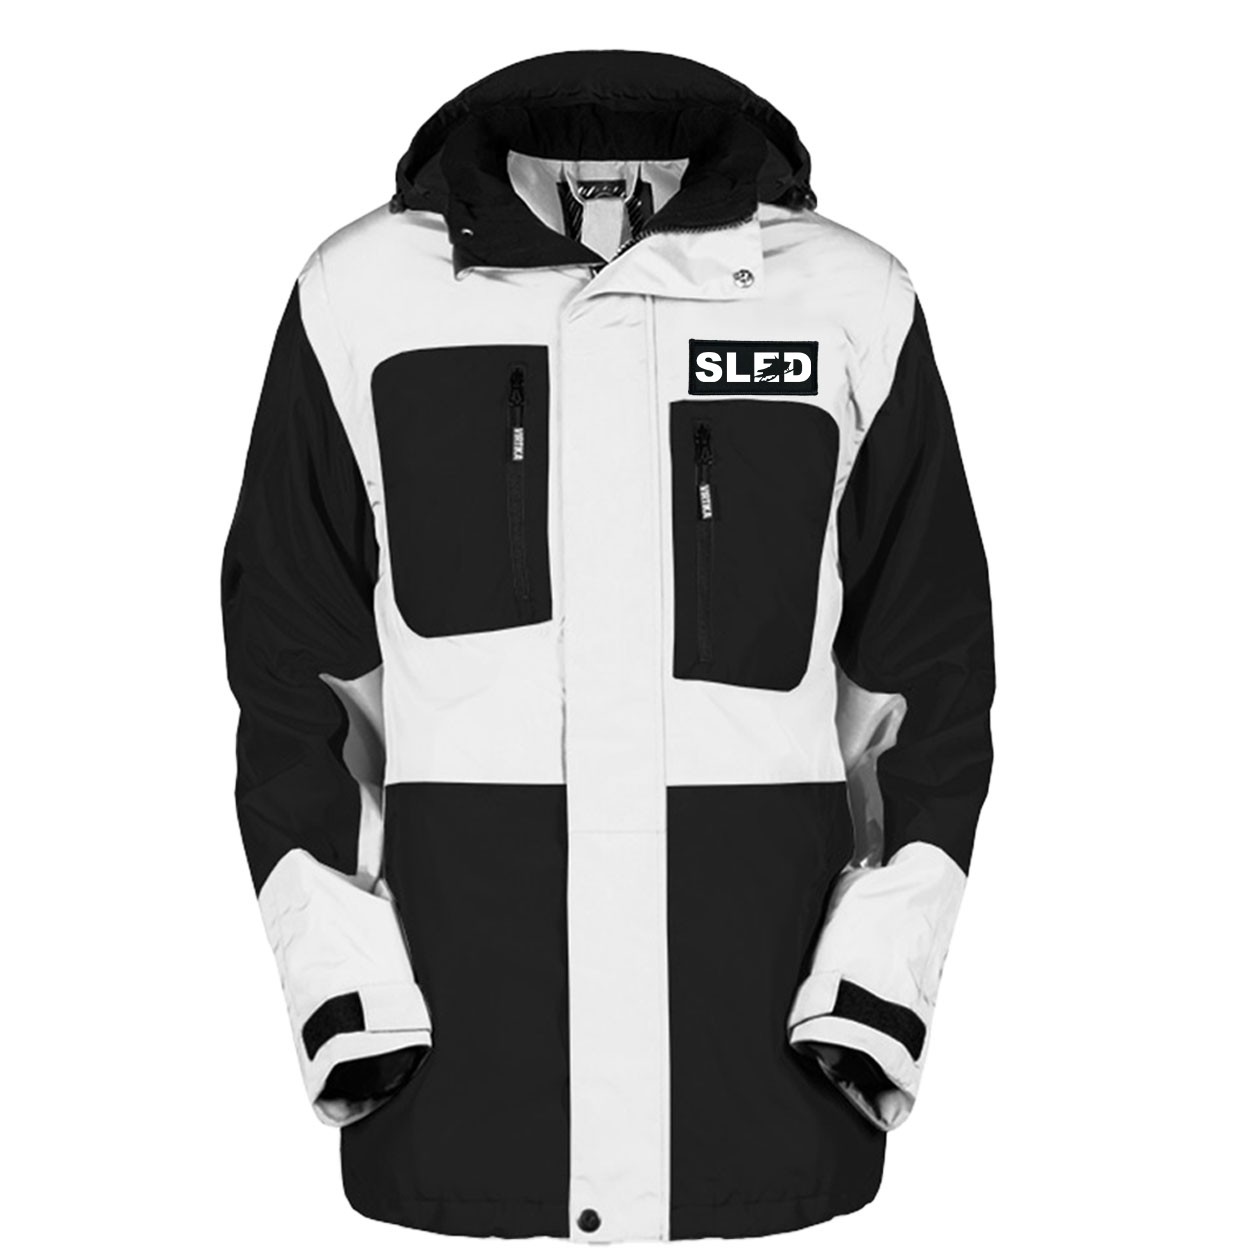 Sled Snowmobile Logo Pro Waterproof Breathable Winter Virtika Jacket Black/White (White Logo)